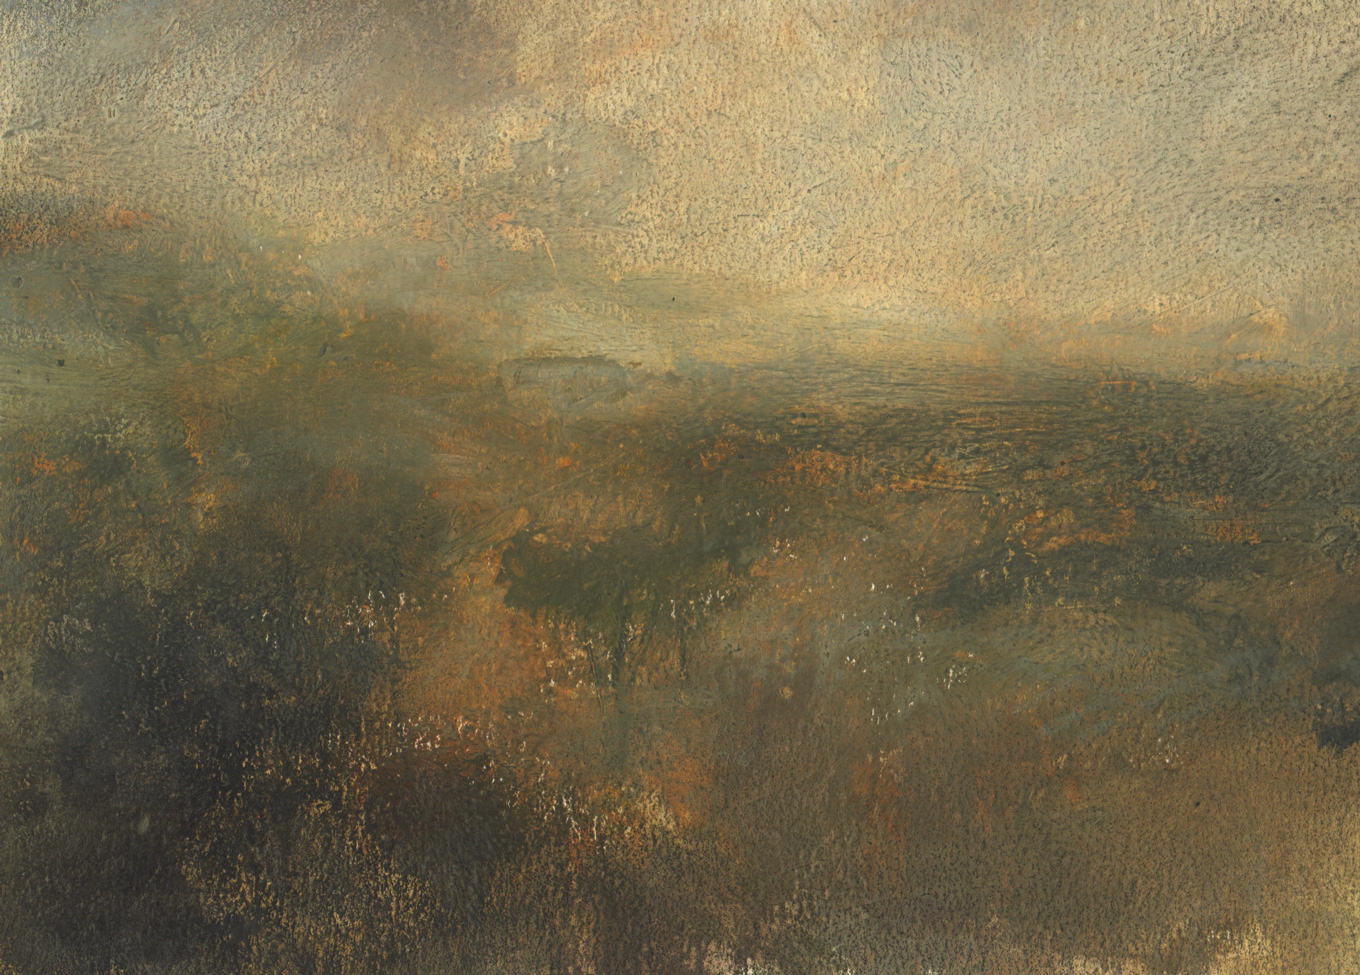 Nicholas Herbert, British Artist - Landscape L947, Sharpenhoe Series, View Across Fields, The Chiltern Hills, contemporary mixed media painting